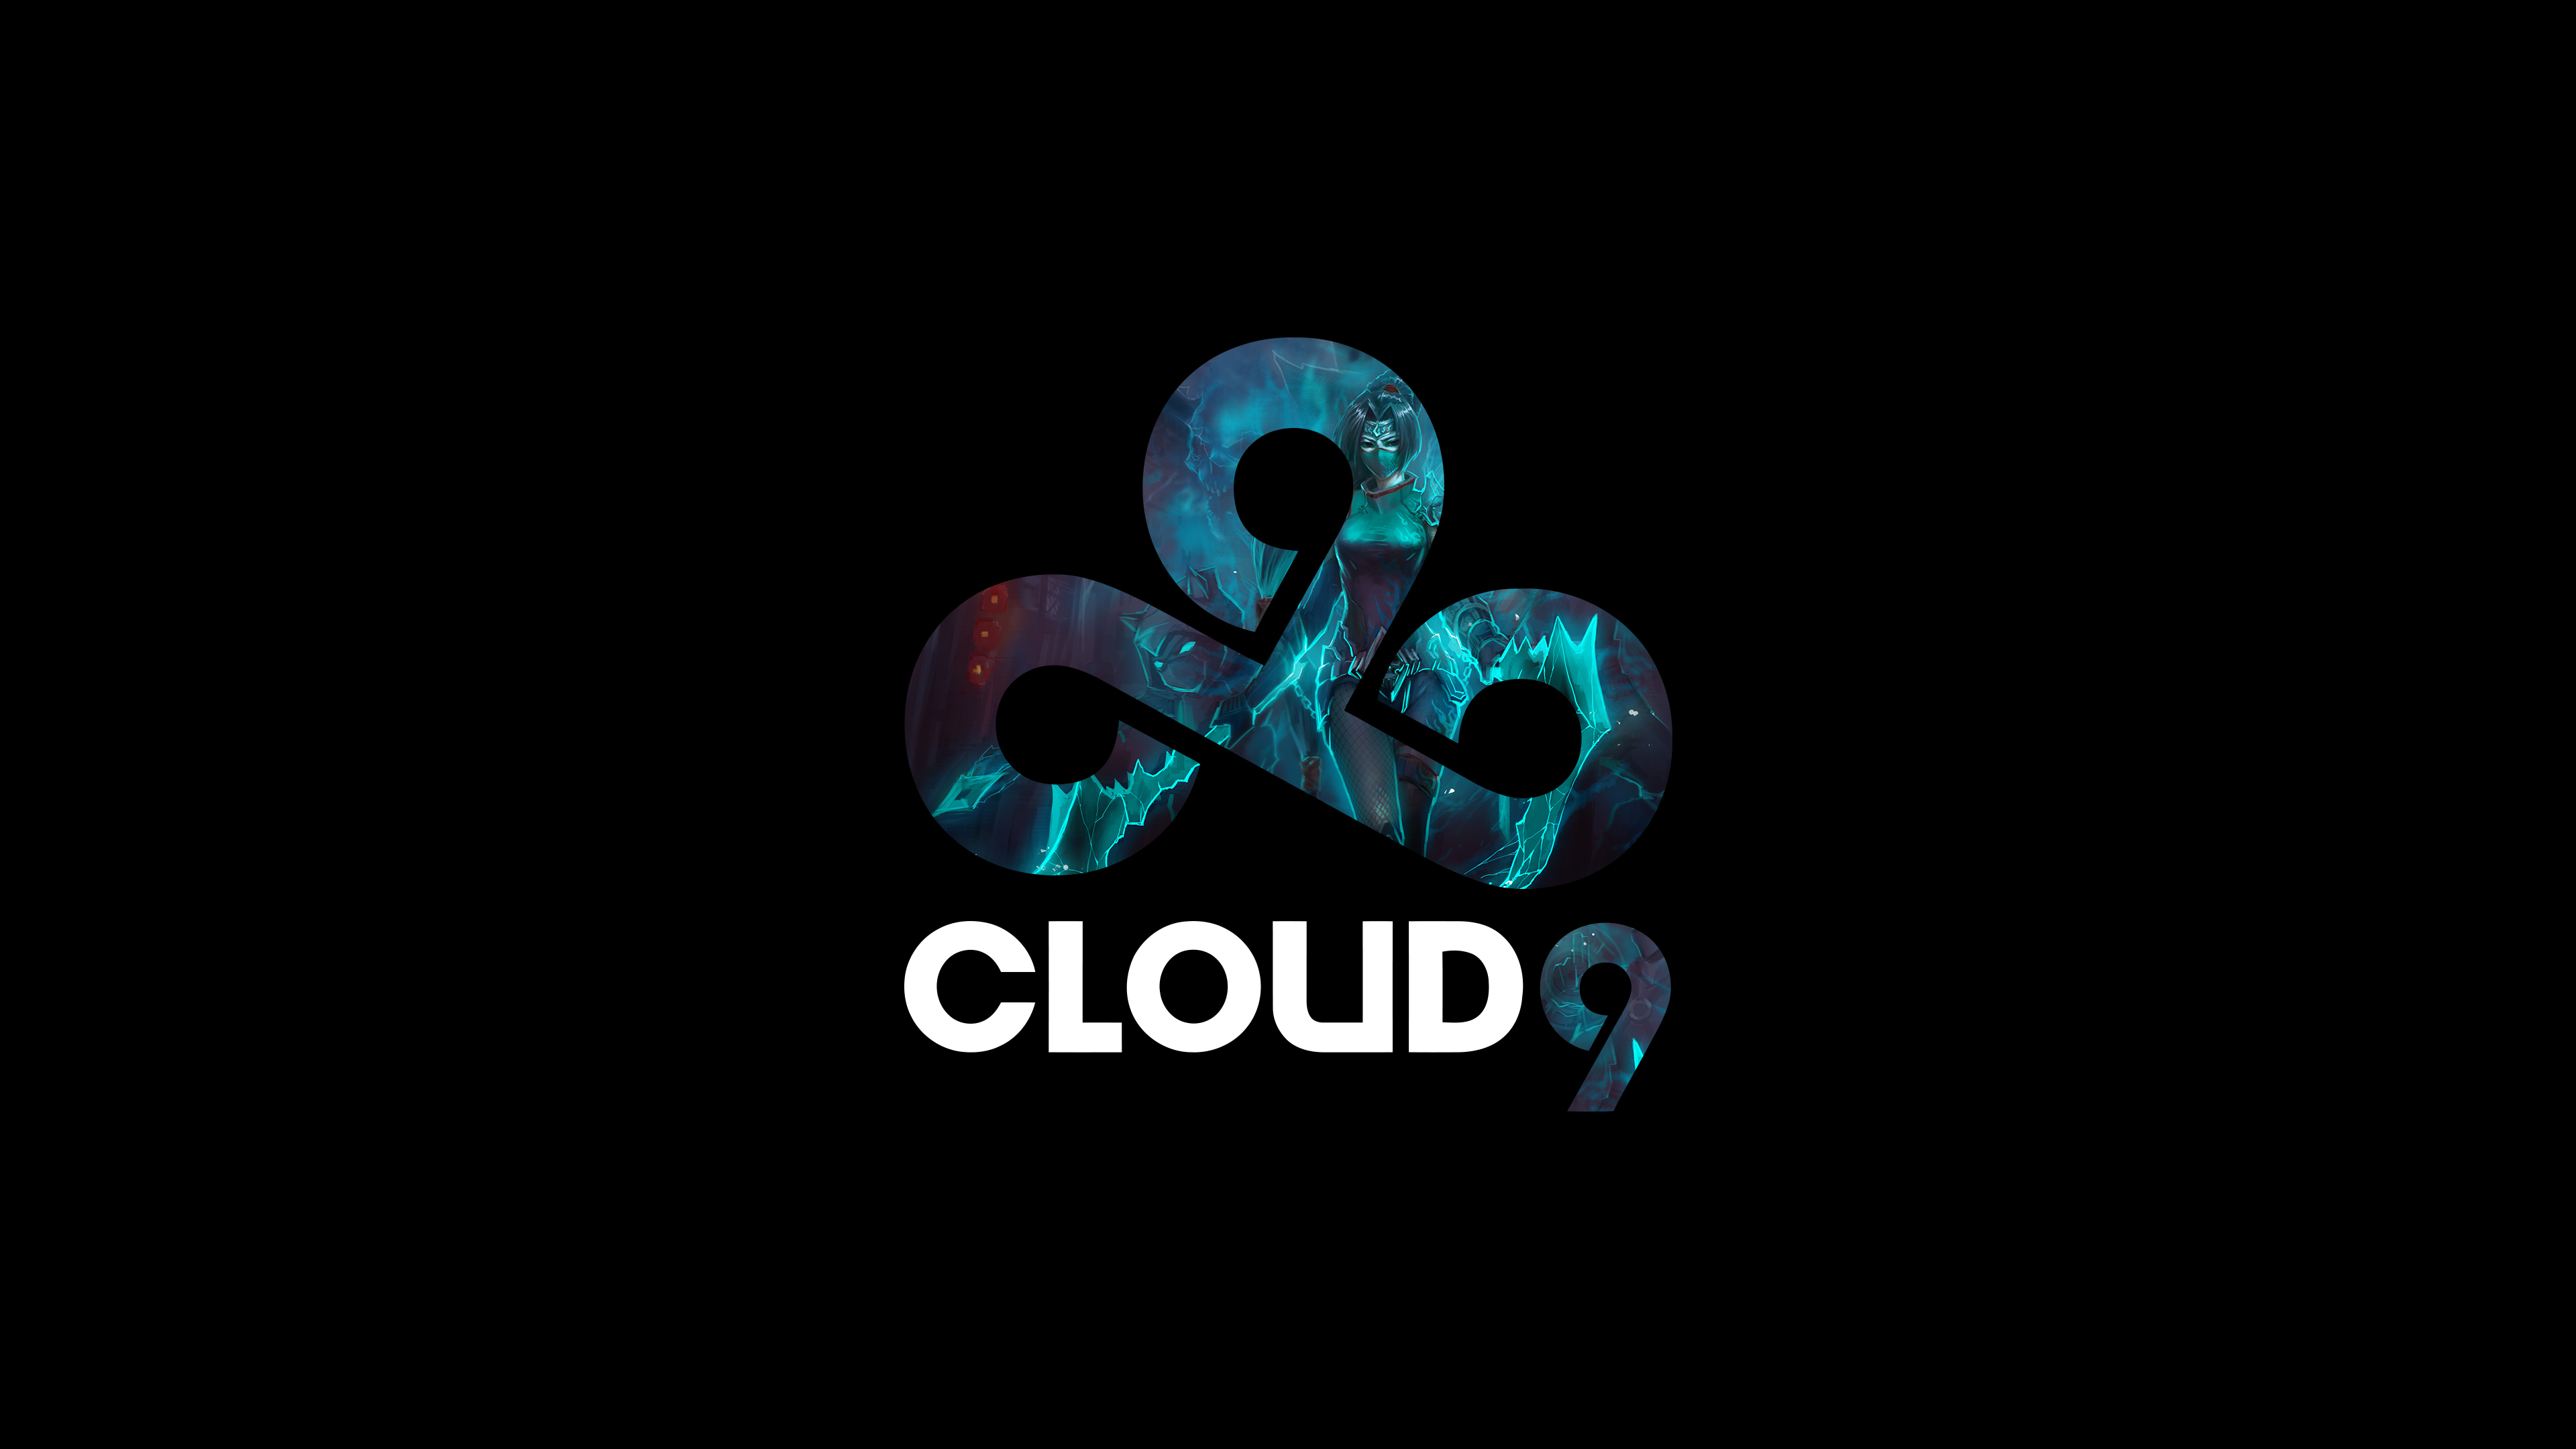 Natalipolyakov9. Клауд 9. Cloud9 на аву. Логотип cloud9. Лого Клауд 9.